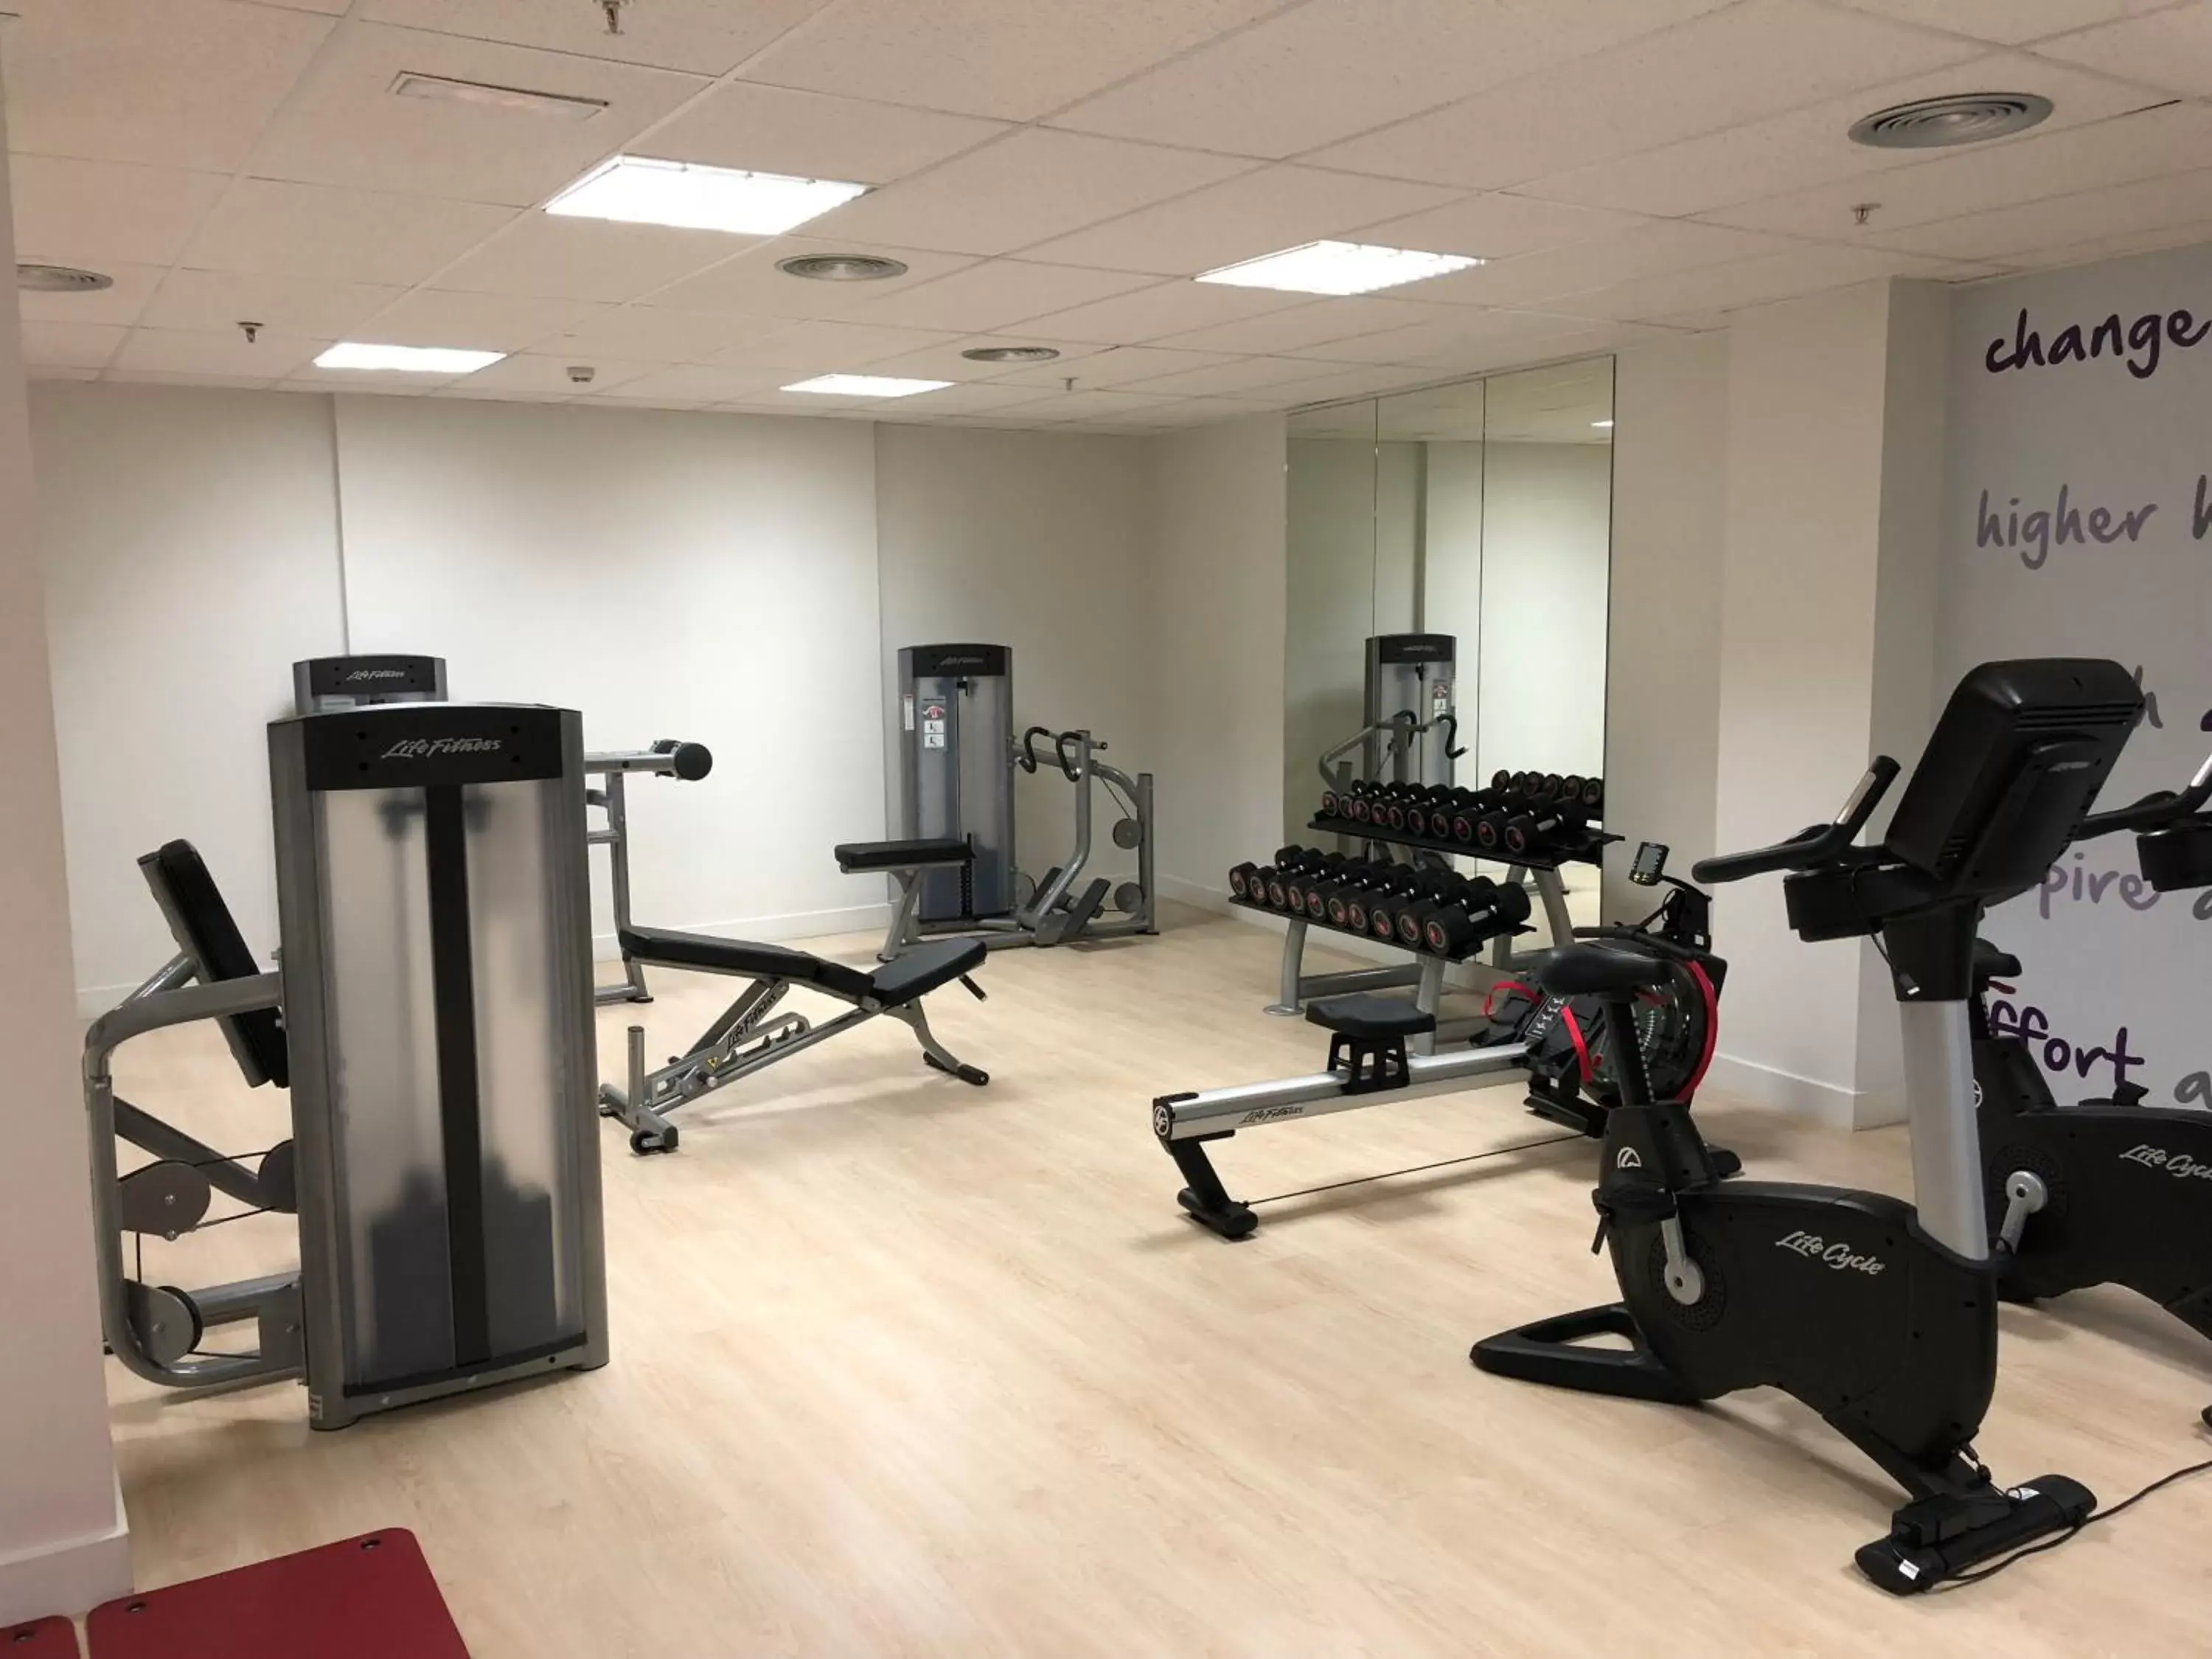 Fitness centre/facilities, Fitness Center/Facilities in Capri by Fraser Barcelona